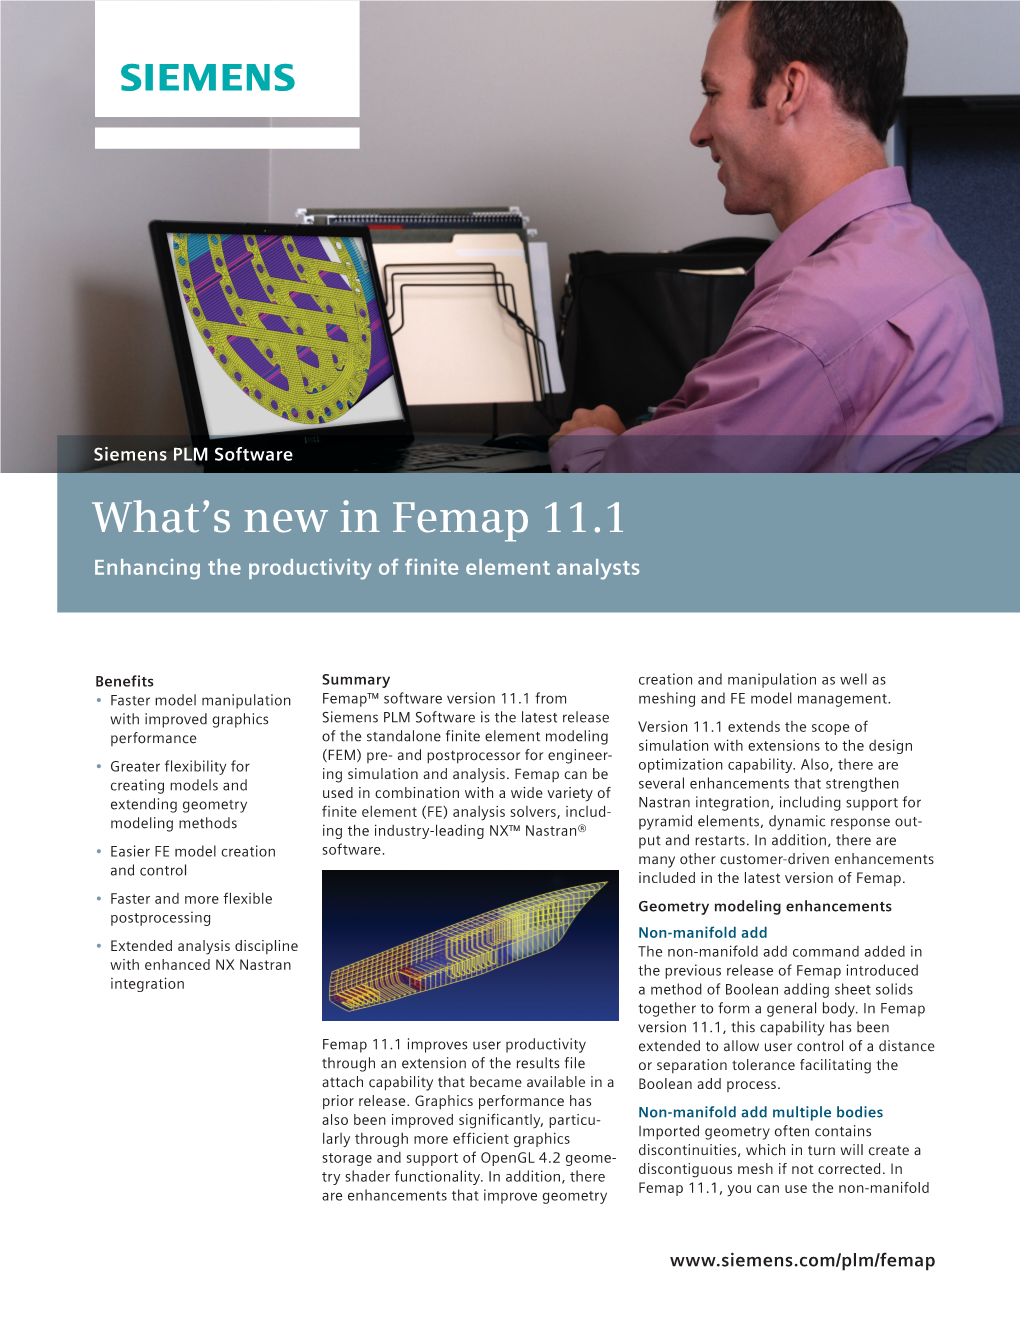 Siemens PLM Femap Version 11.1 Fact Sheet